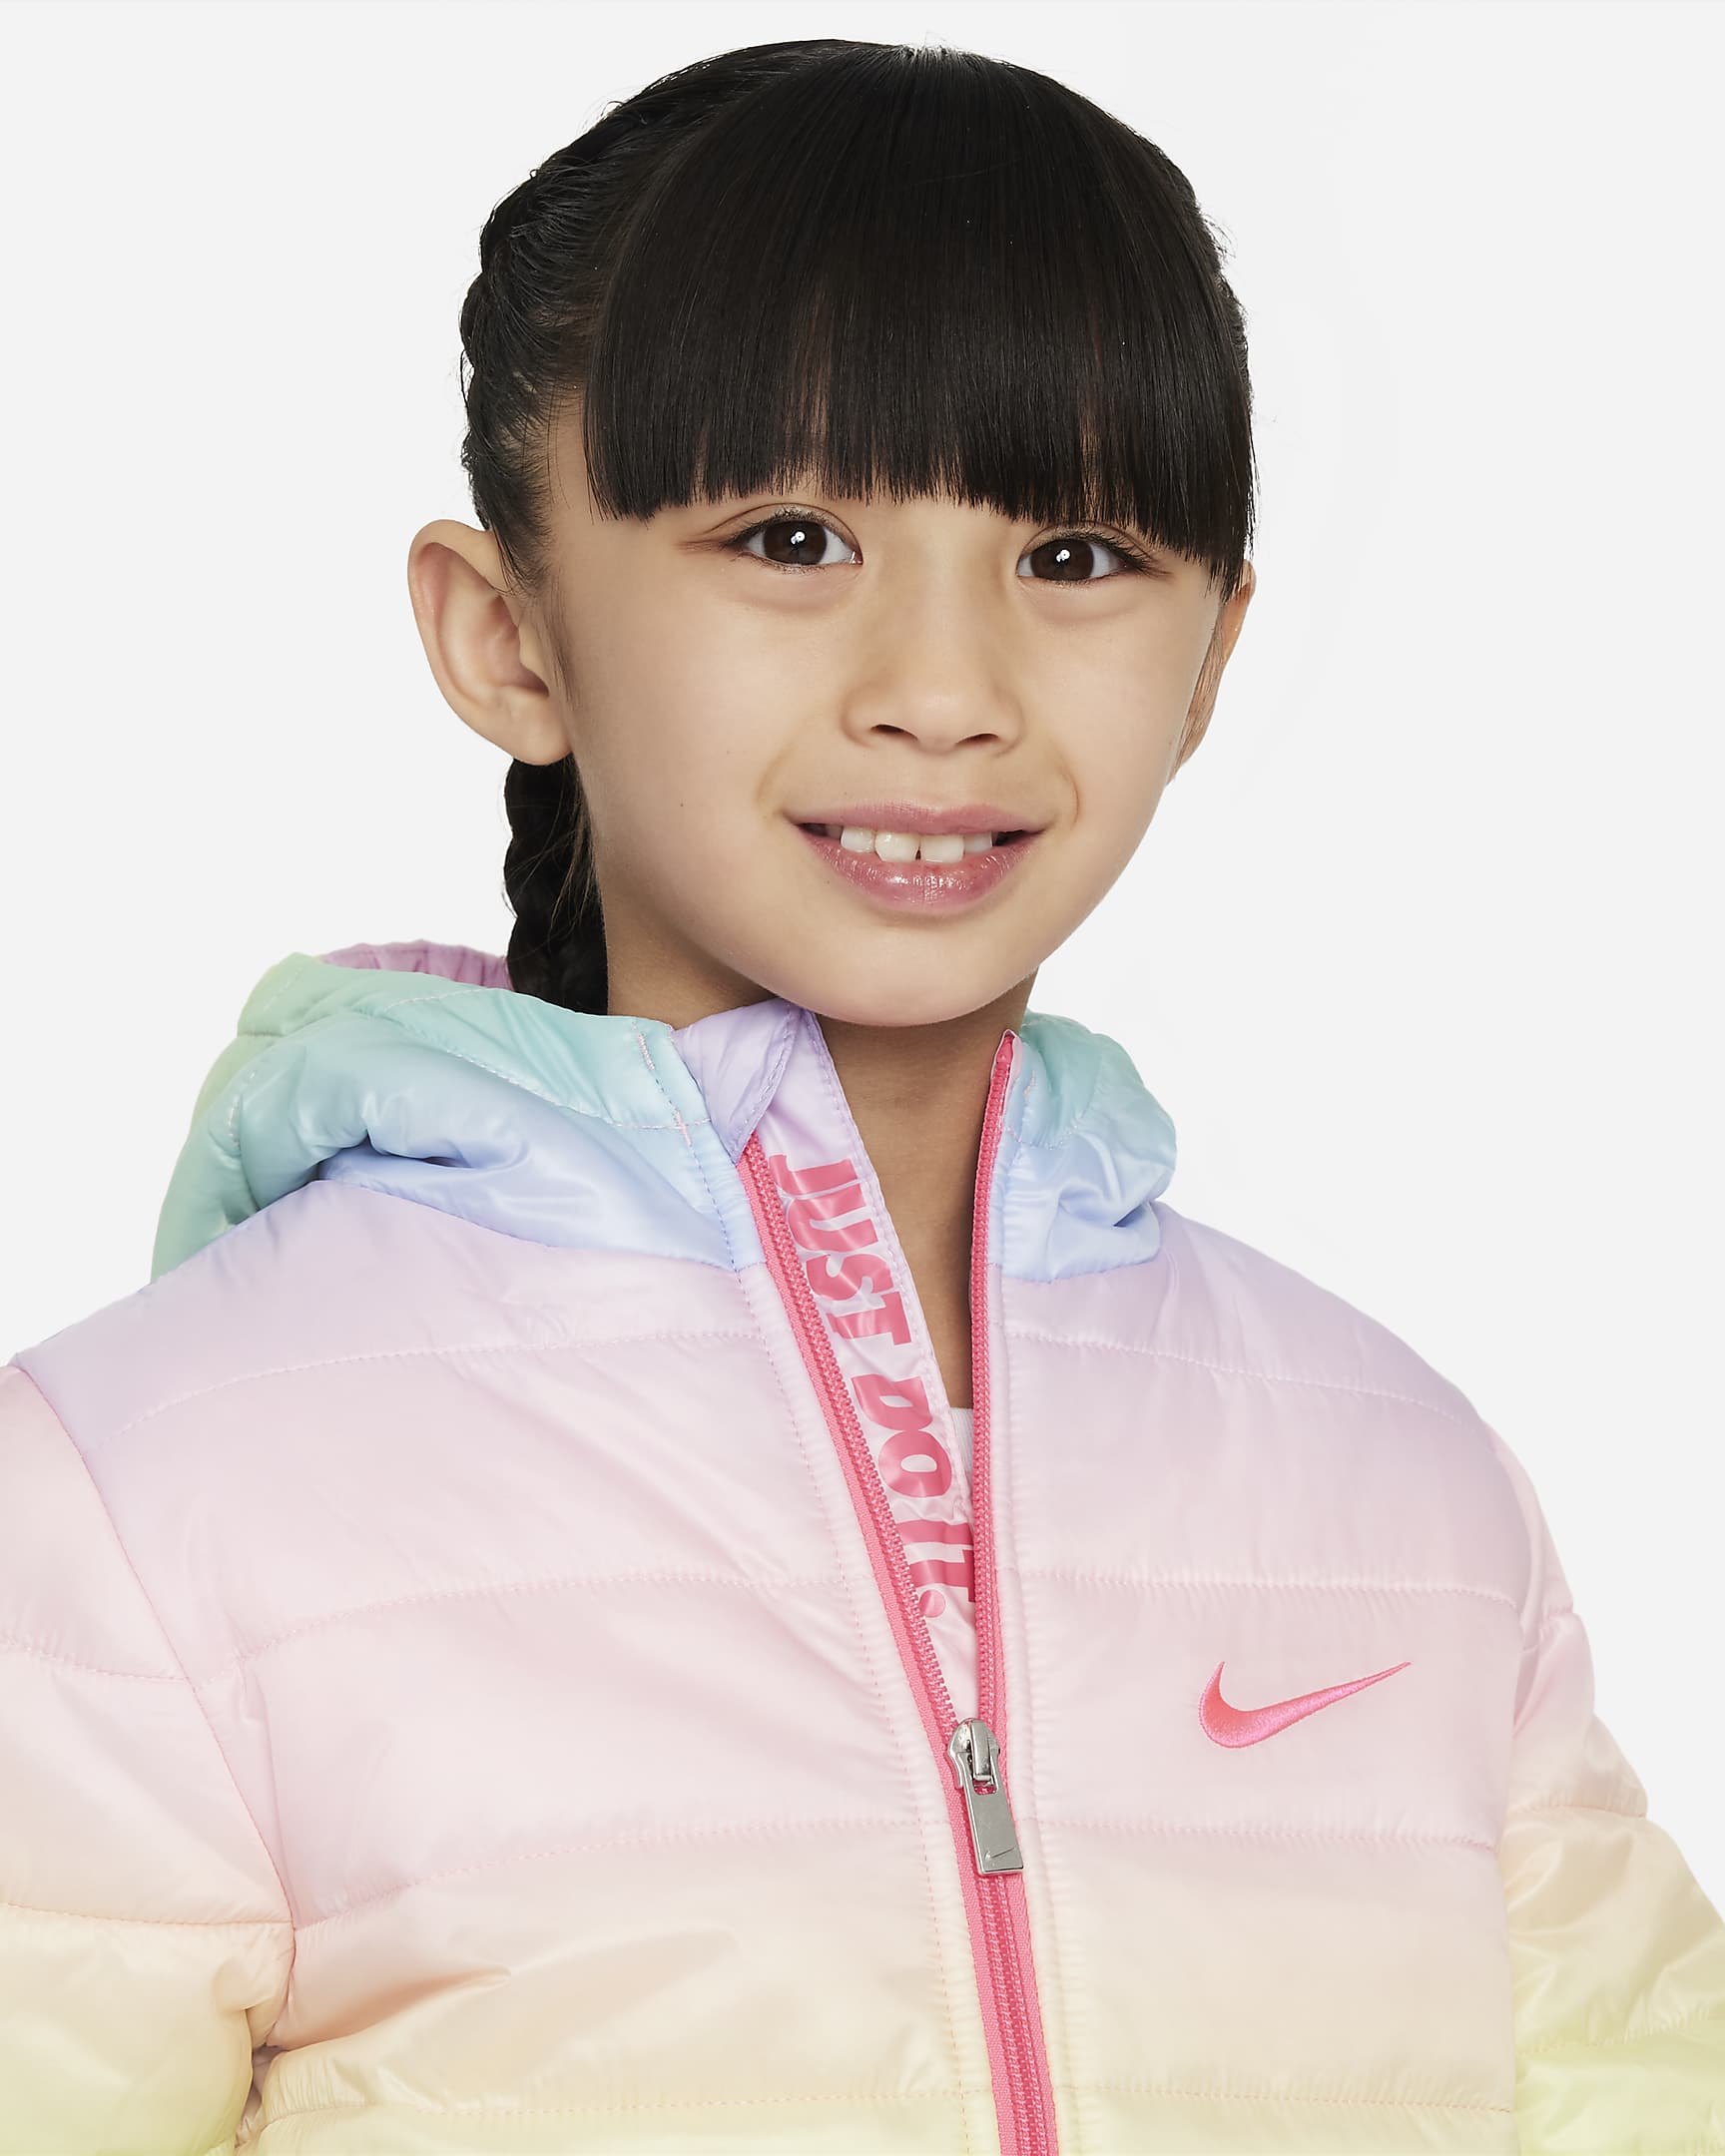 Nike Little Kids' Puffer Jacket. Nike.com